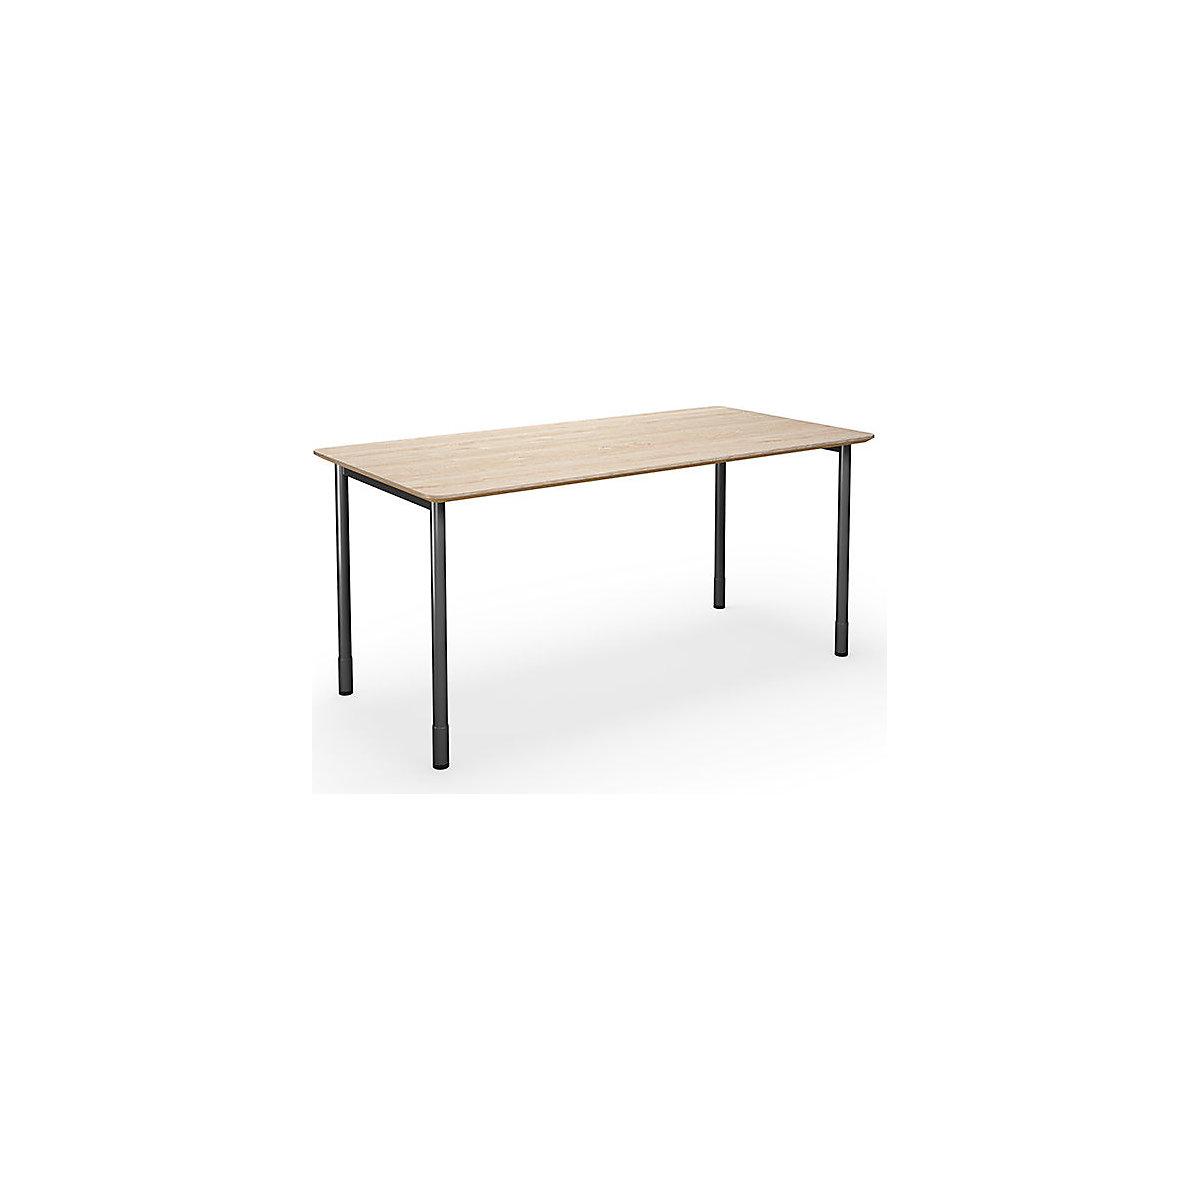 DUO-C Trend multi-purpose desk, straight tabletop, rounded corners, WxD 1400 x 800 mm, oak, black-3